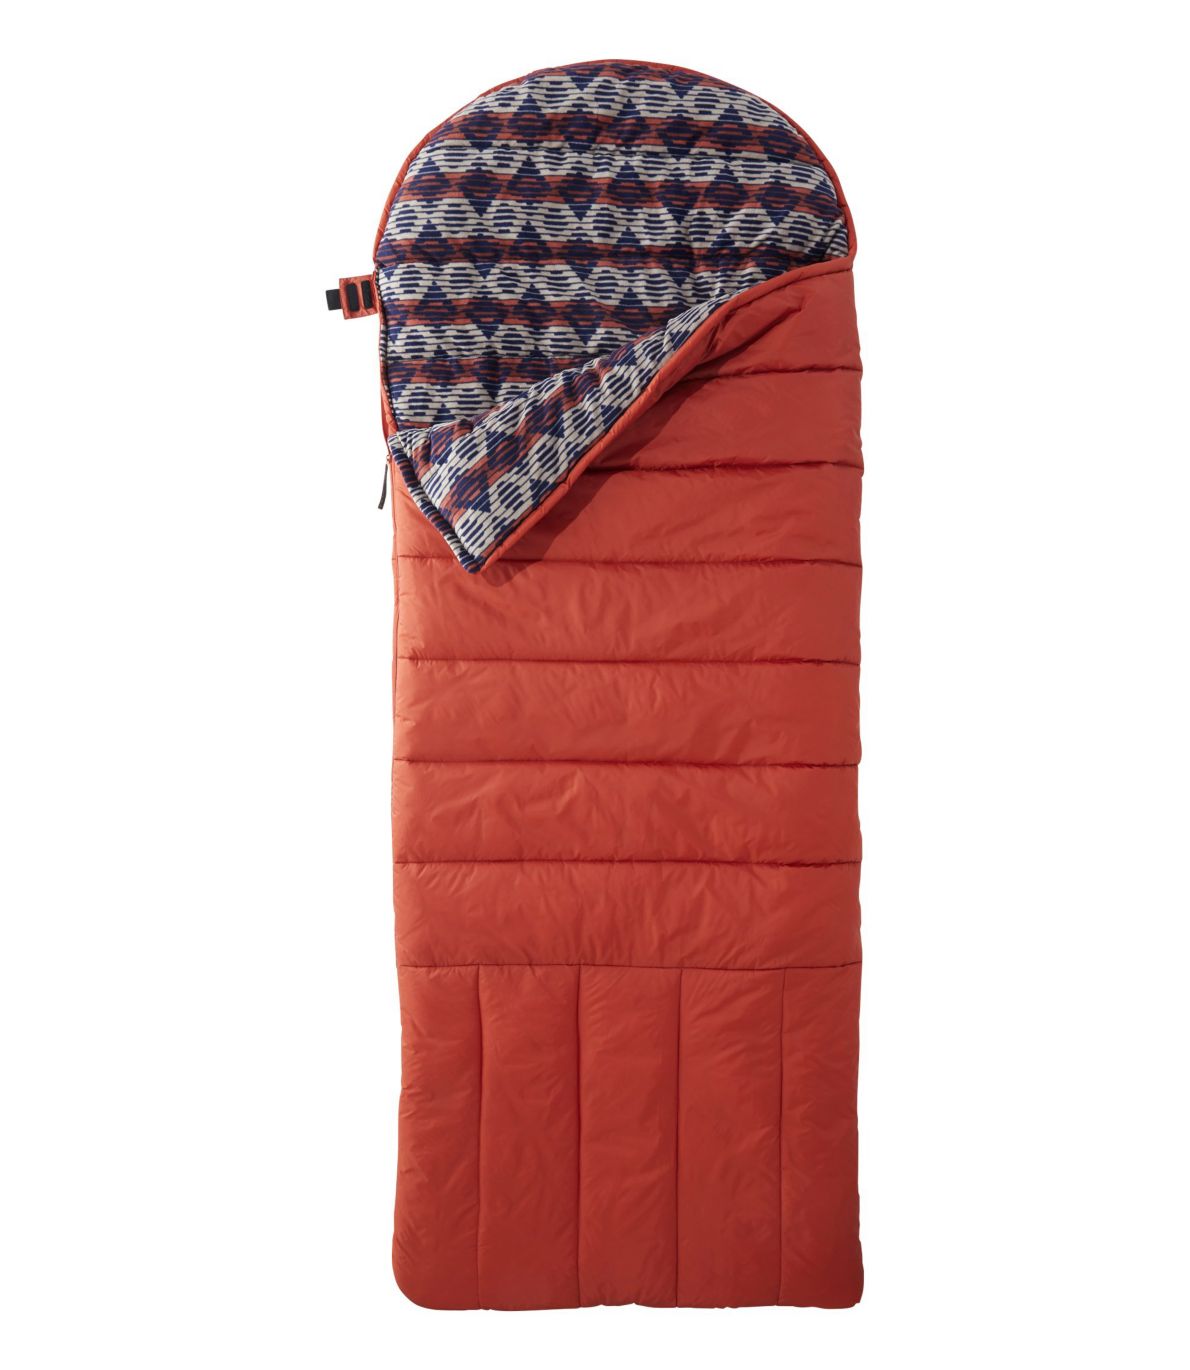 Adults' Deluxe Fleece-Lined Camp Bag 30°, Geo Print